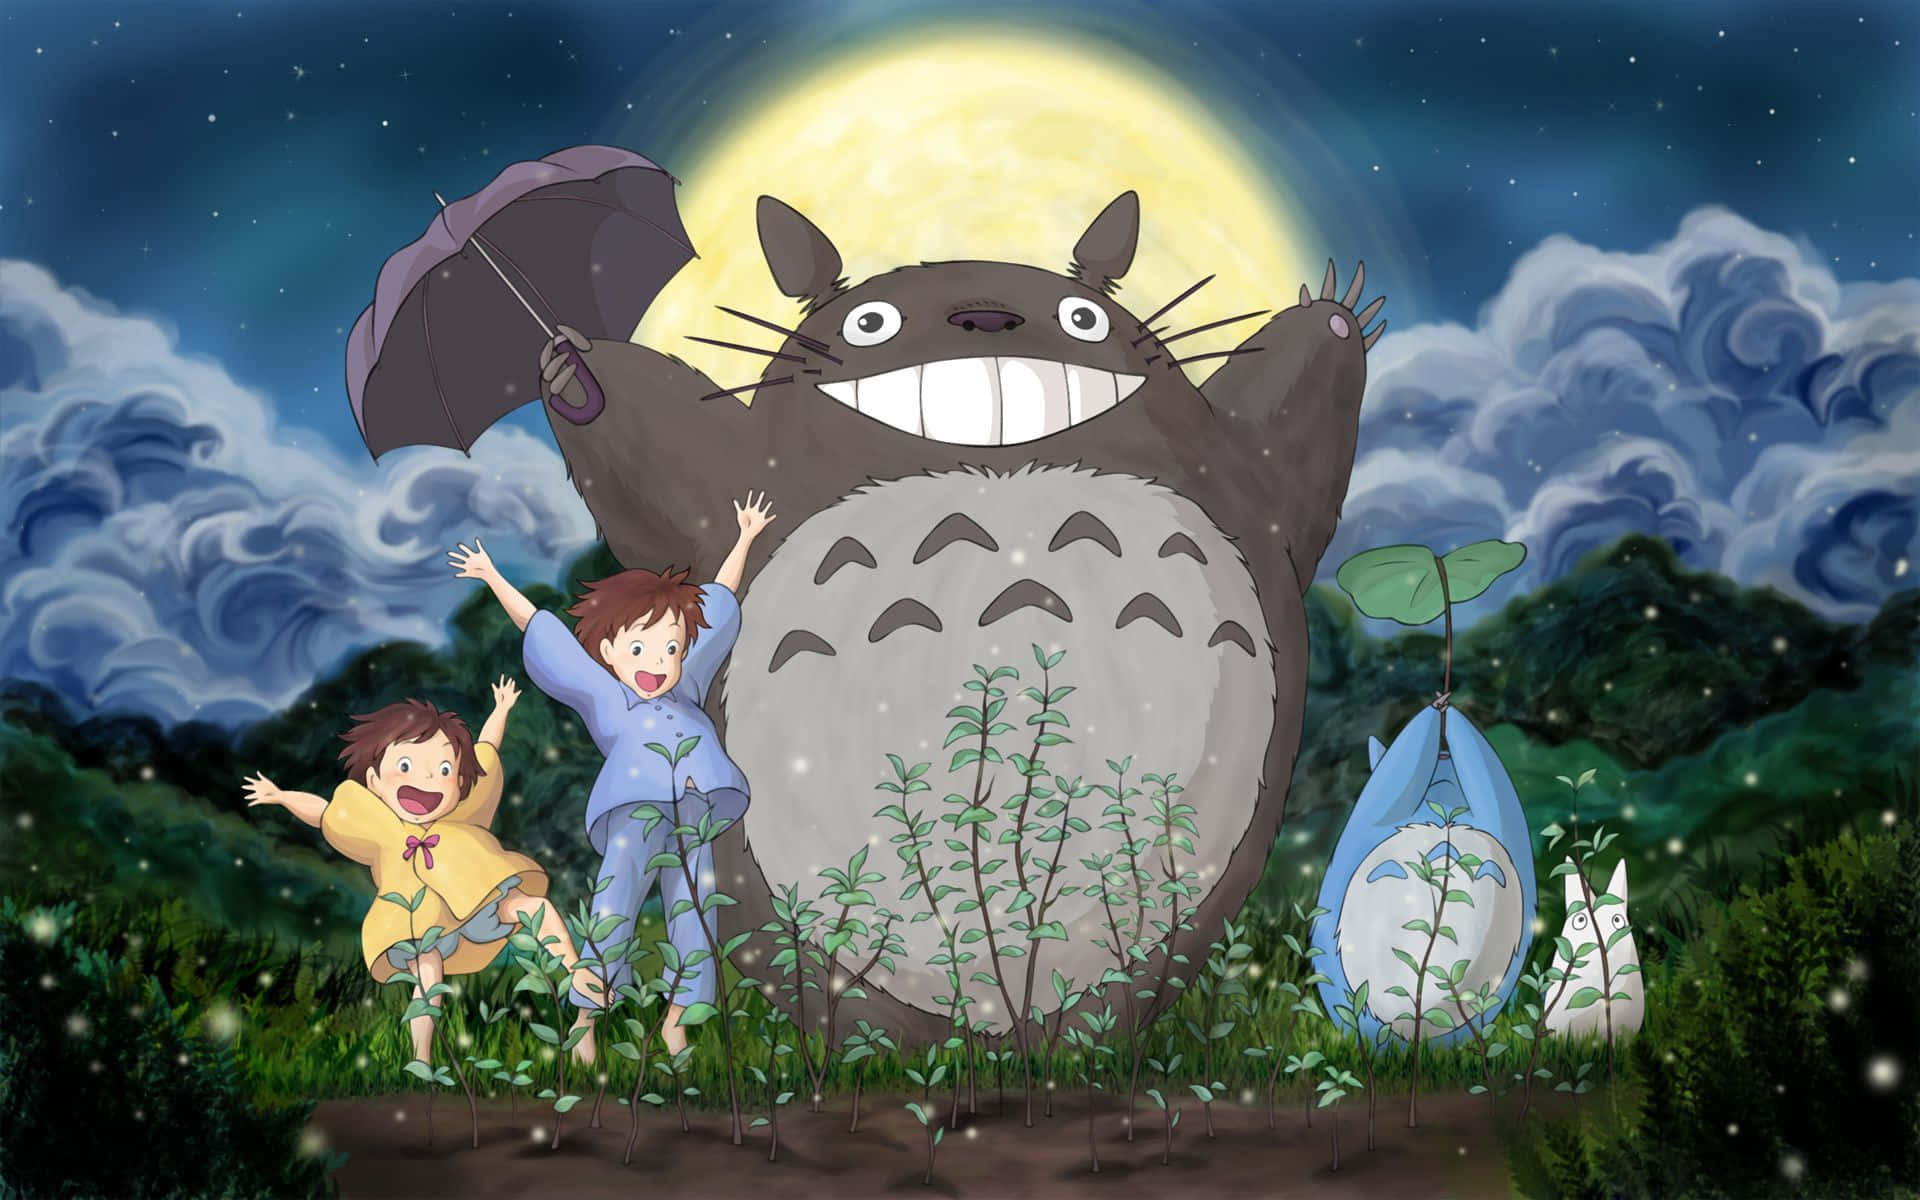 Captivating Visual From Hayao Miyazaki's Masterpiece Wallpaper